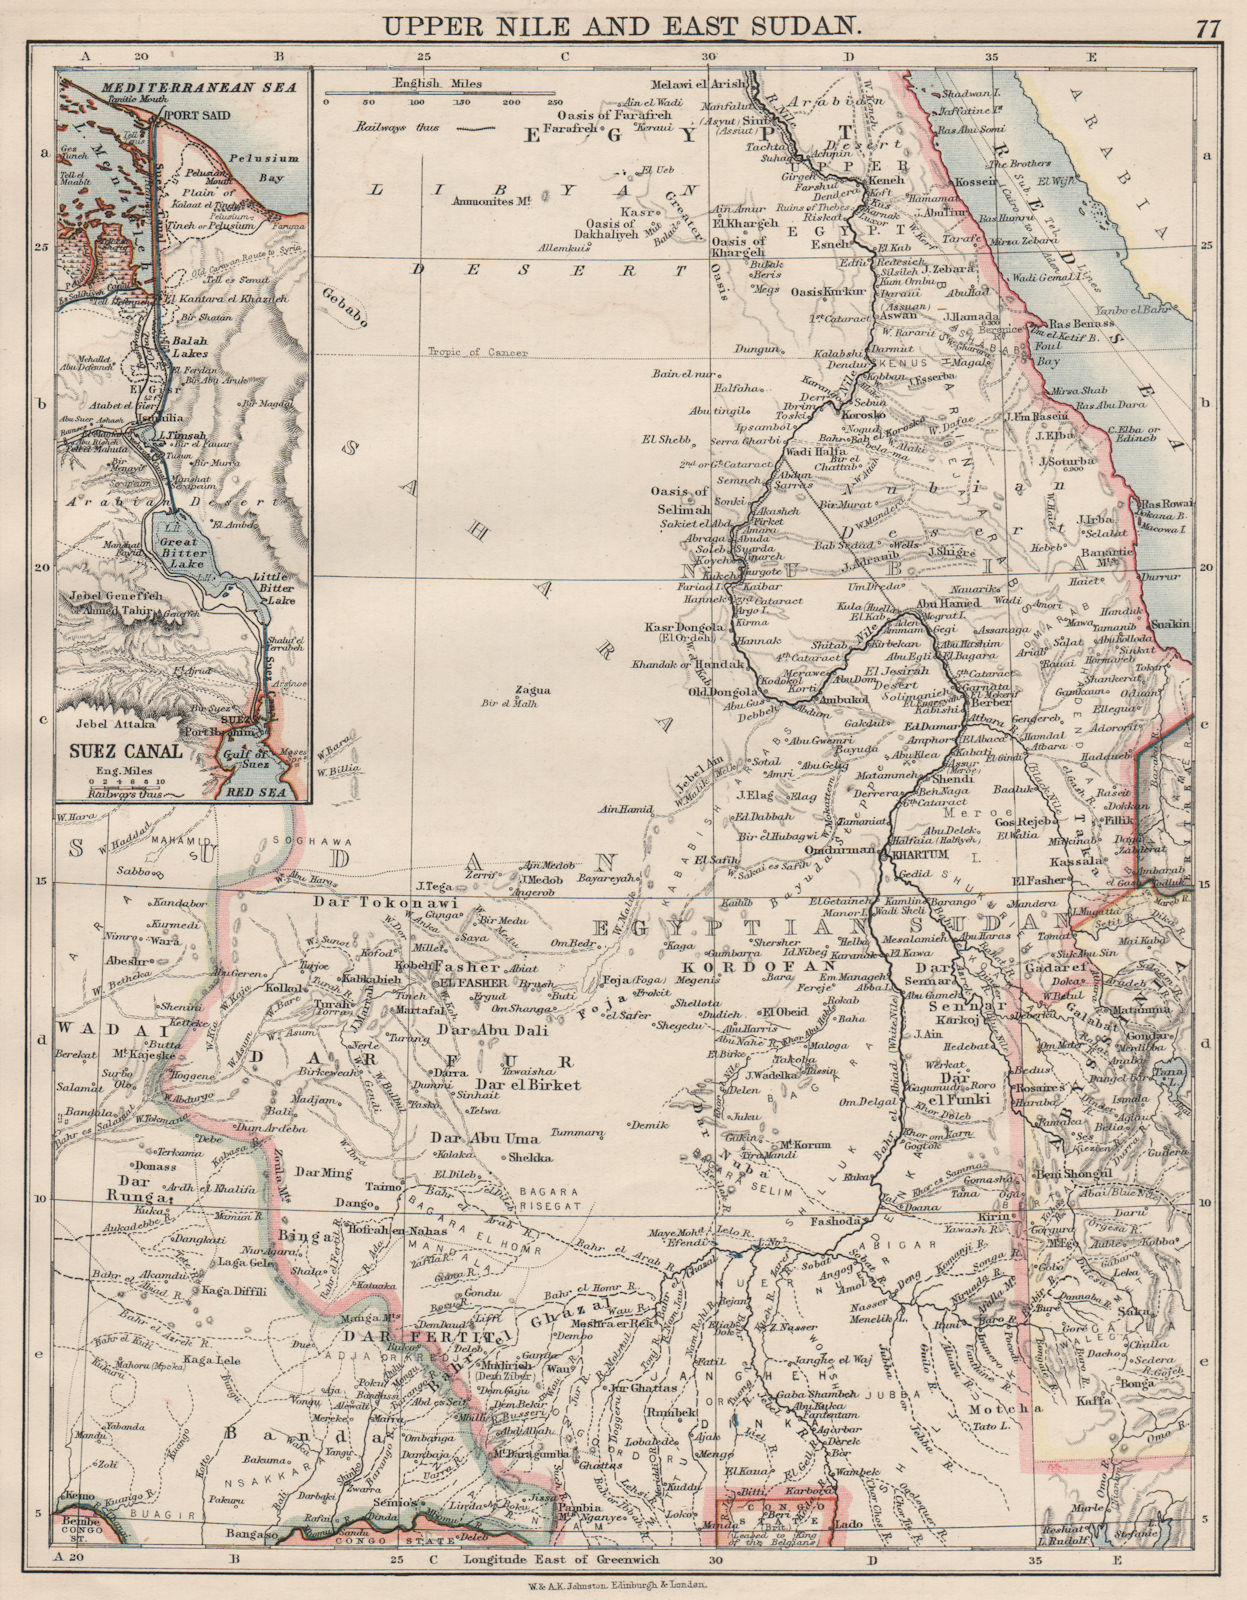 UPPER NILE, EAST SUDAN & SUEZ CANAL. Khartoum.White/Blue Nile. JOHNSTON 1900 map